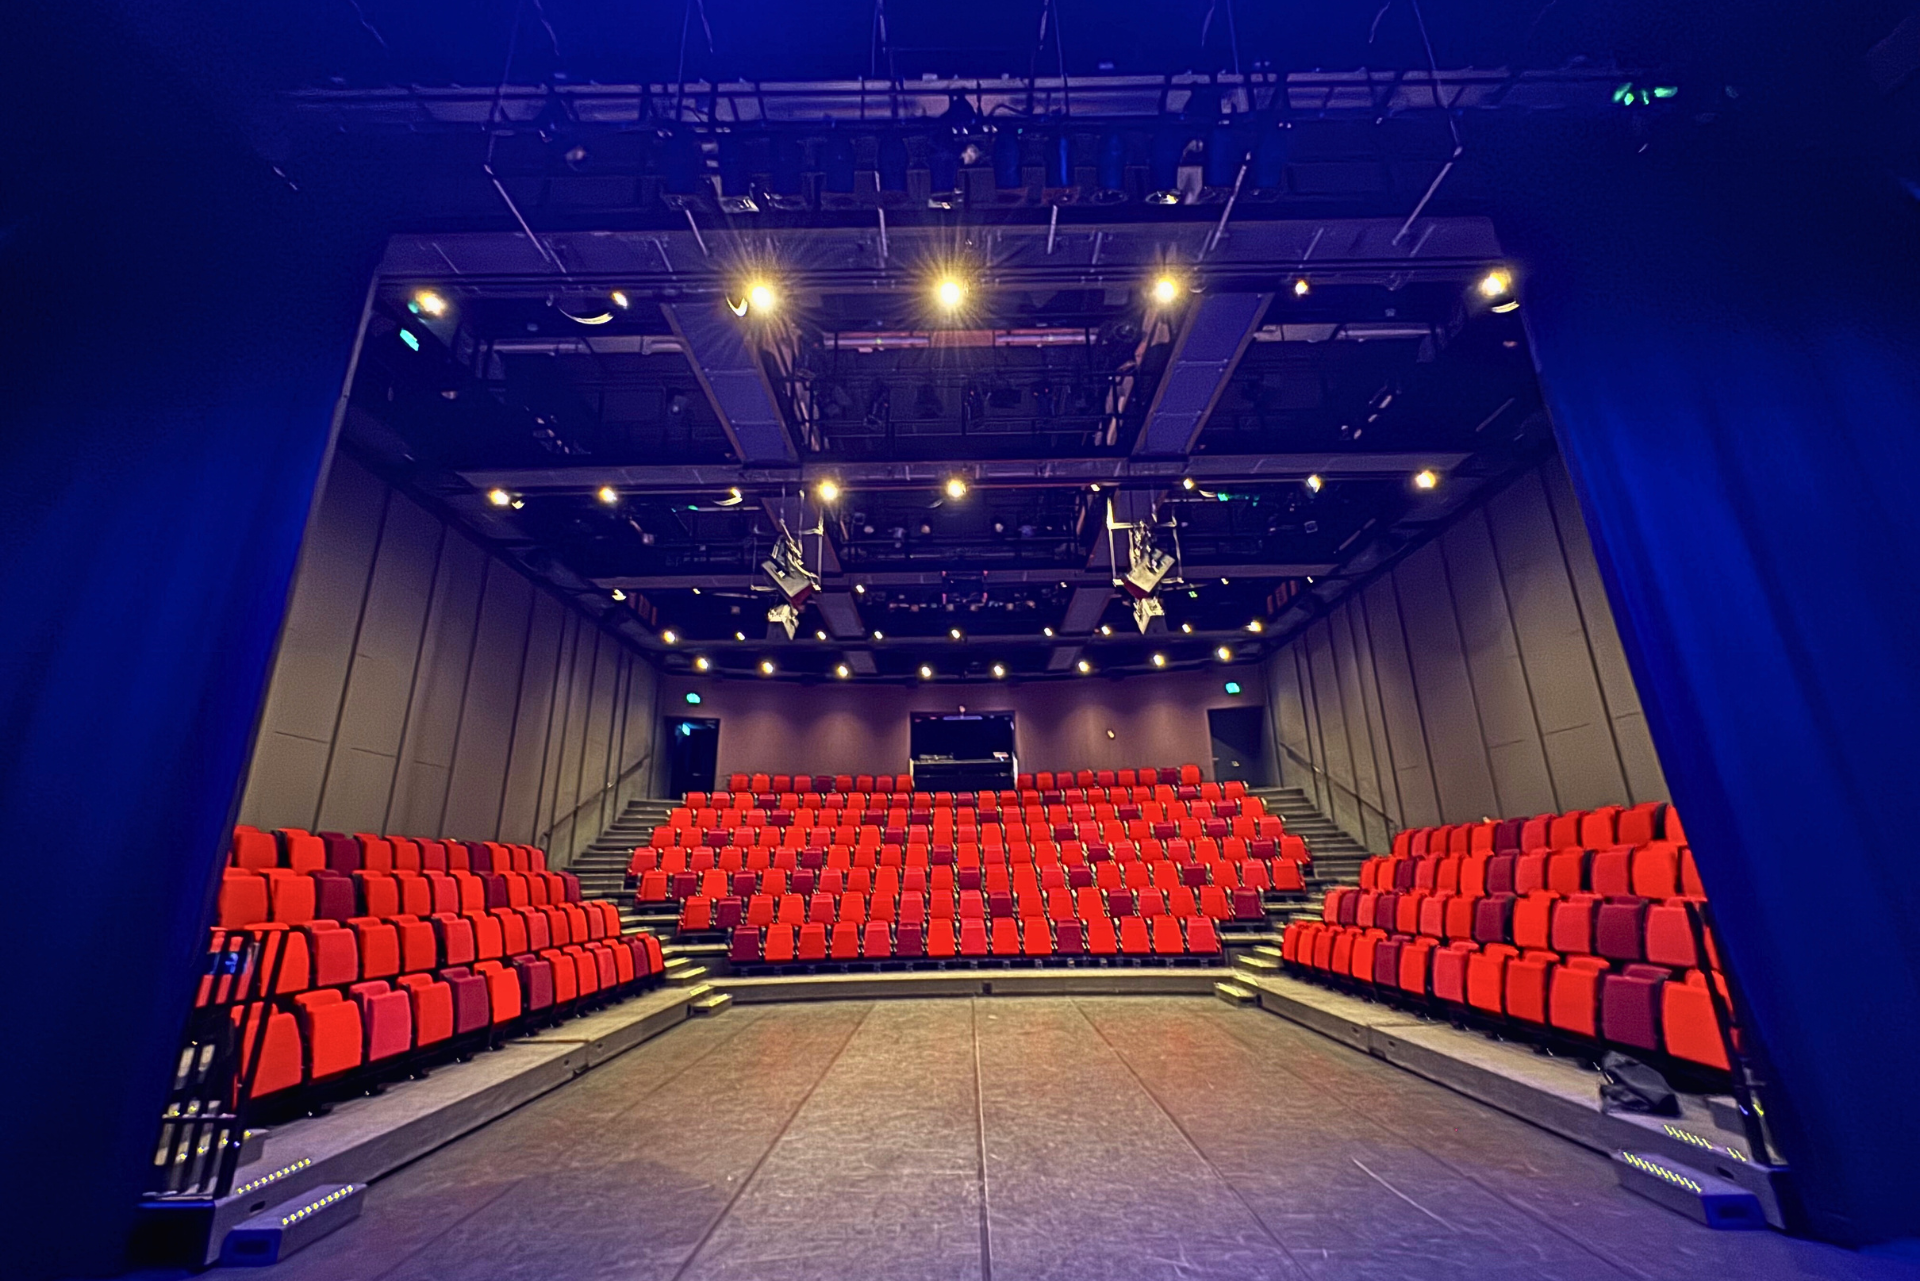 Amphion Theater in Doetinchem